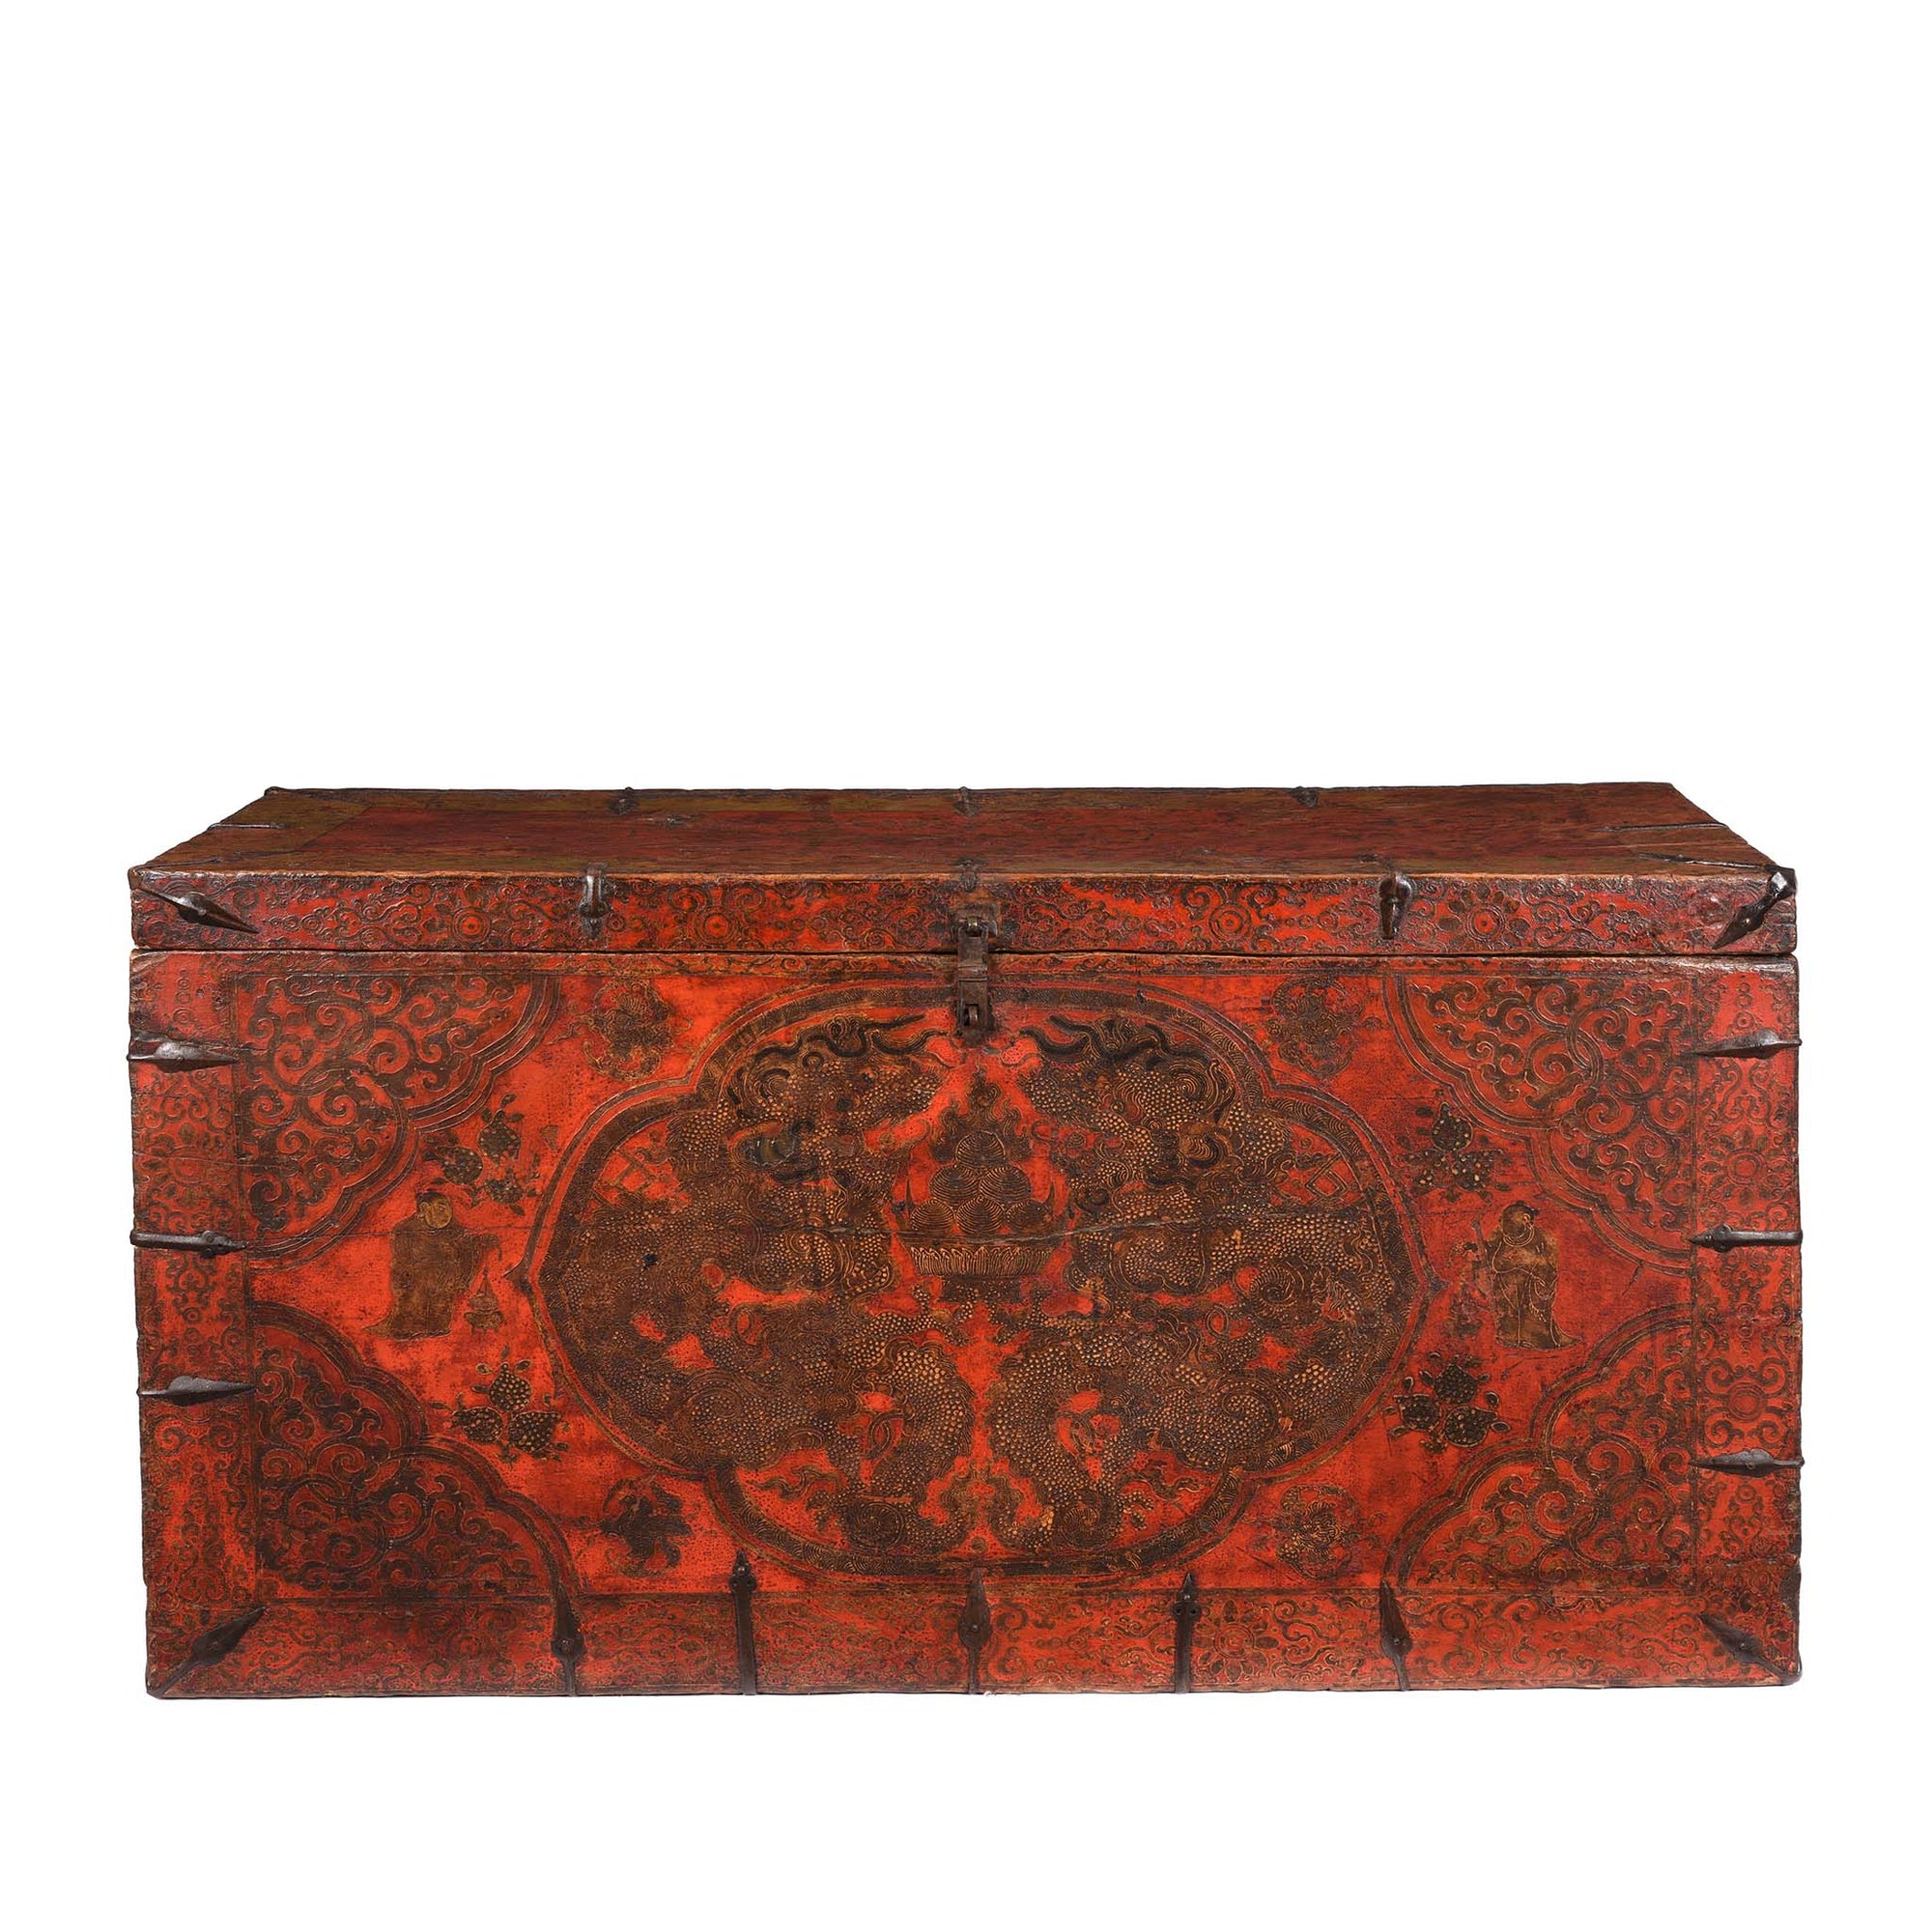 Painted Tibetan 'Double Dragon' Storage Chest - 17thC | Indigo Antiques